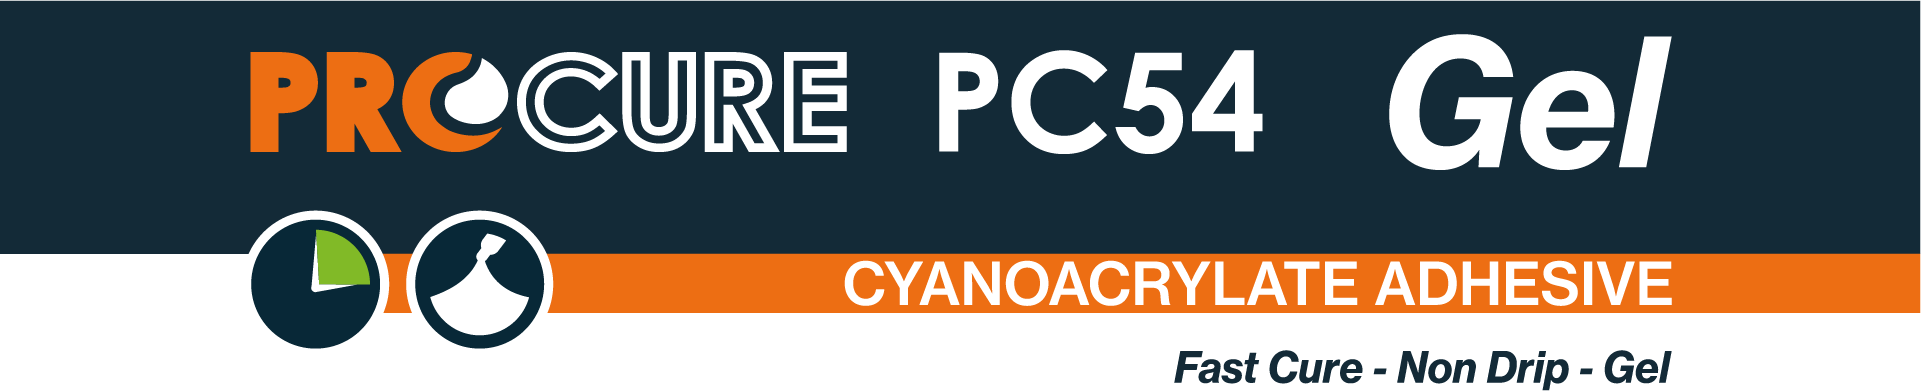 Procure PC54 Cyanoacrylate Adhesive Gel.